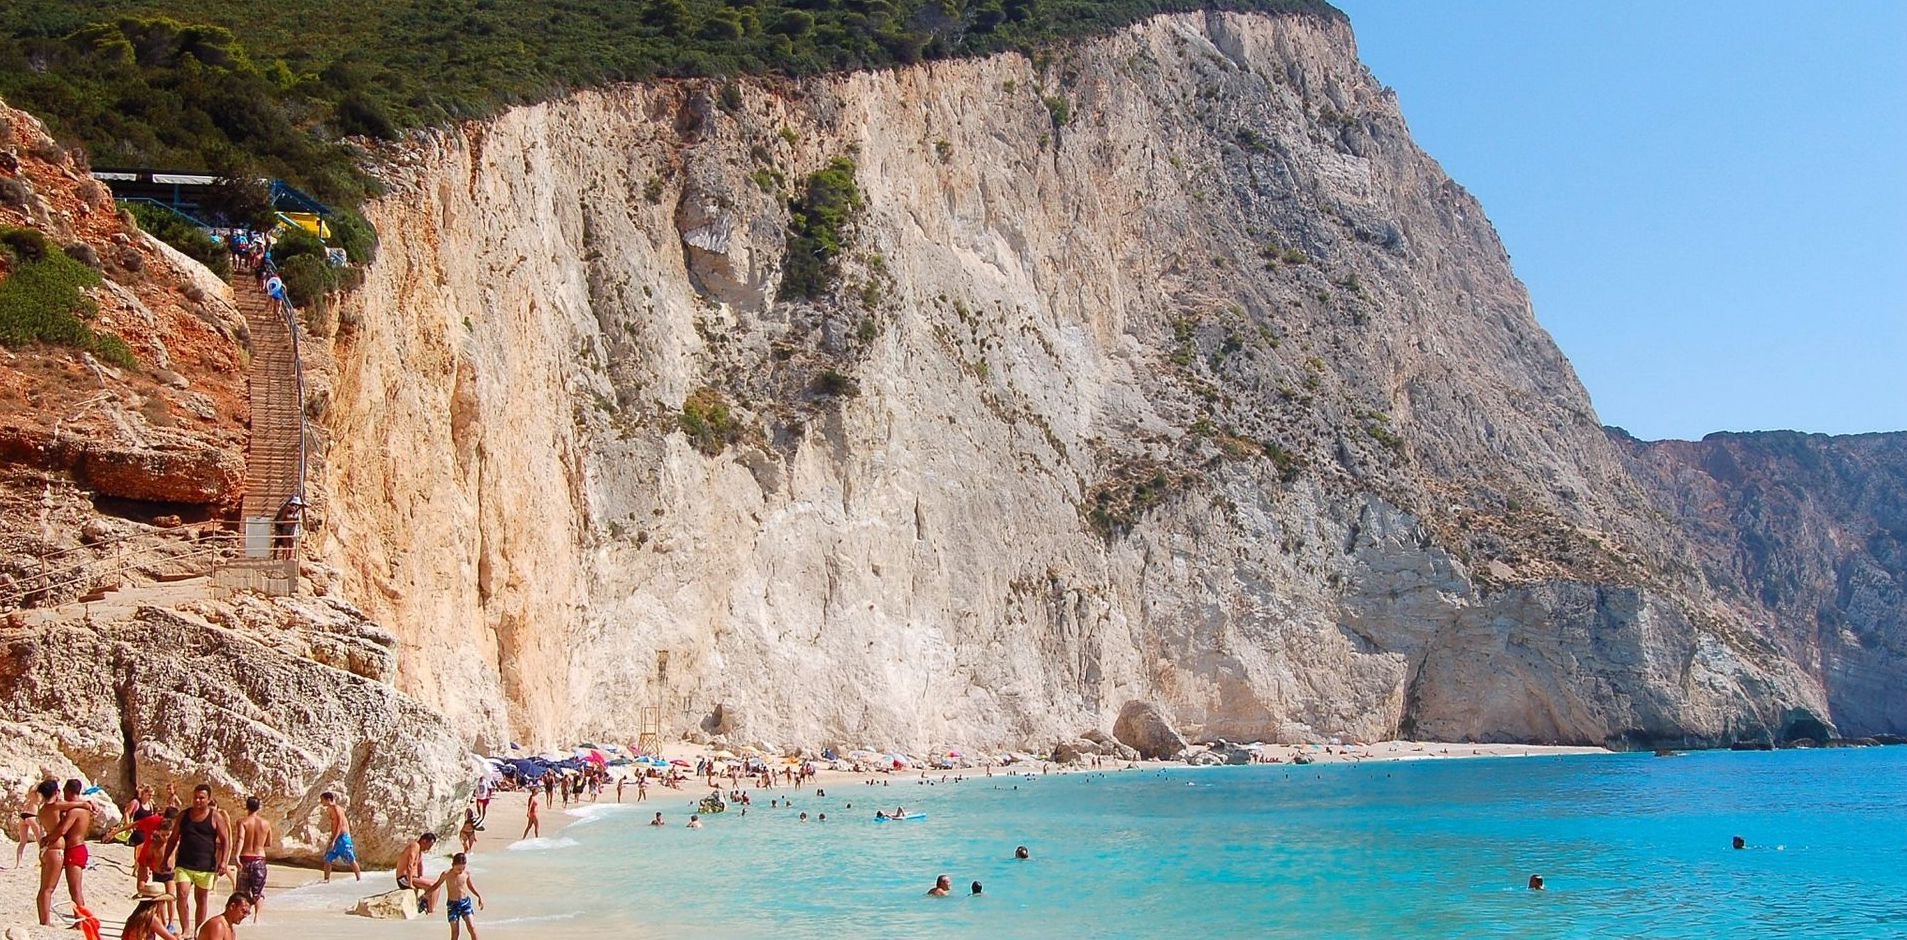 greece greek island reality show loaded in paradise